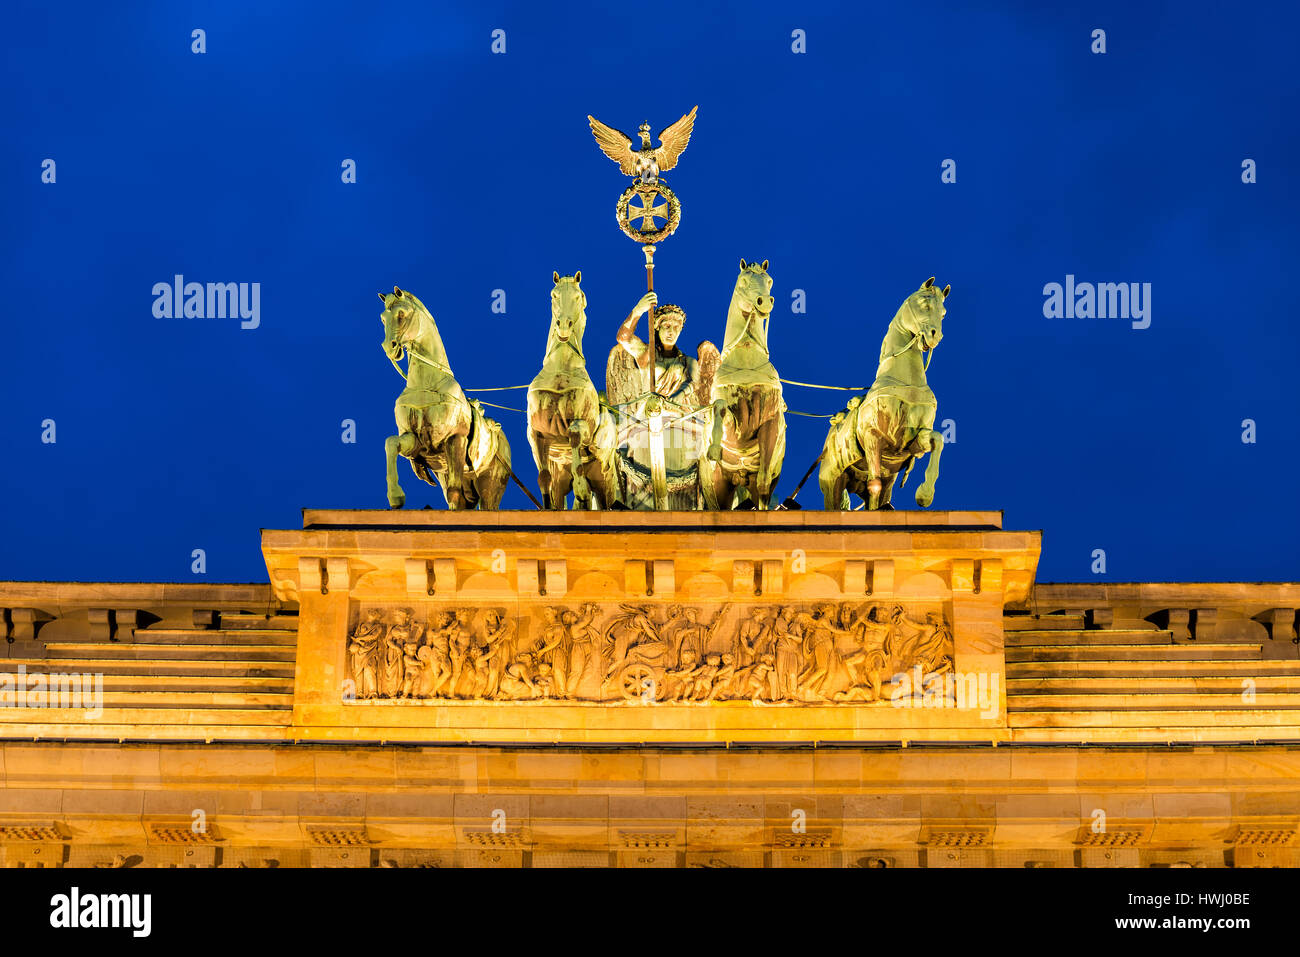 Puerta de Brandenburgo en Berlín. Foto de stock